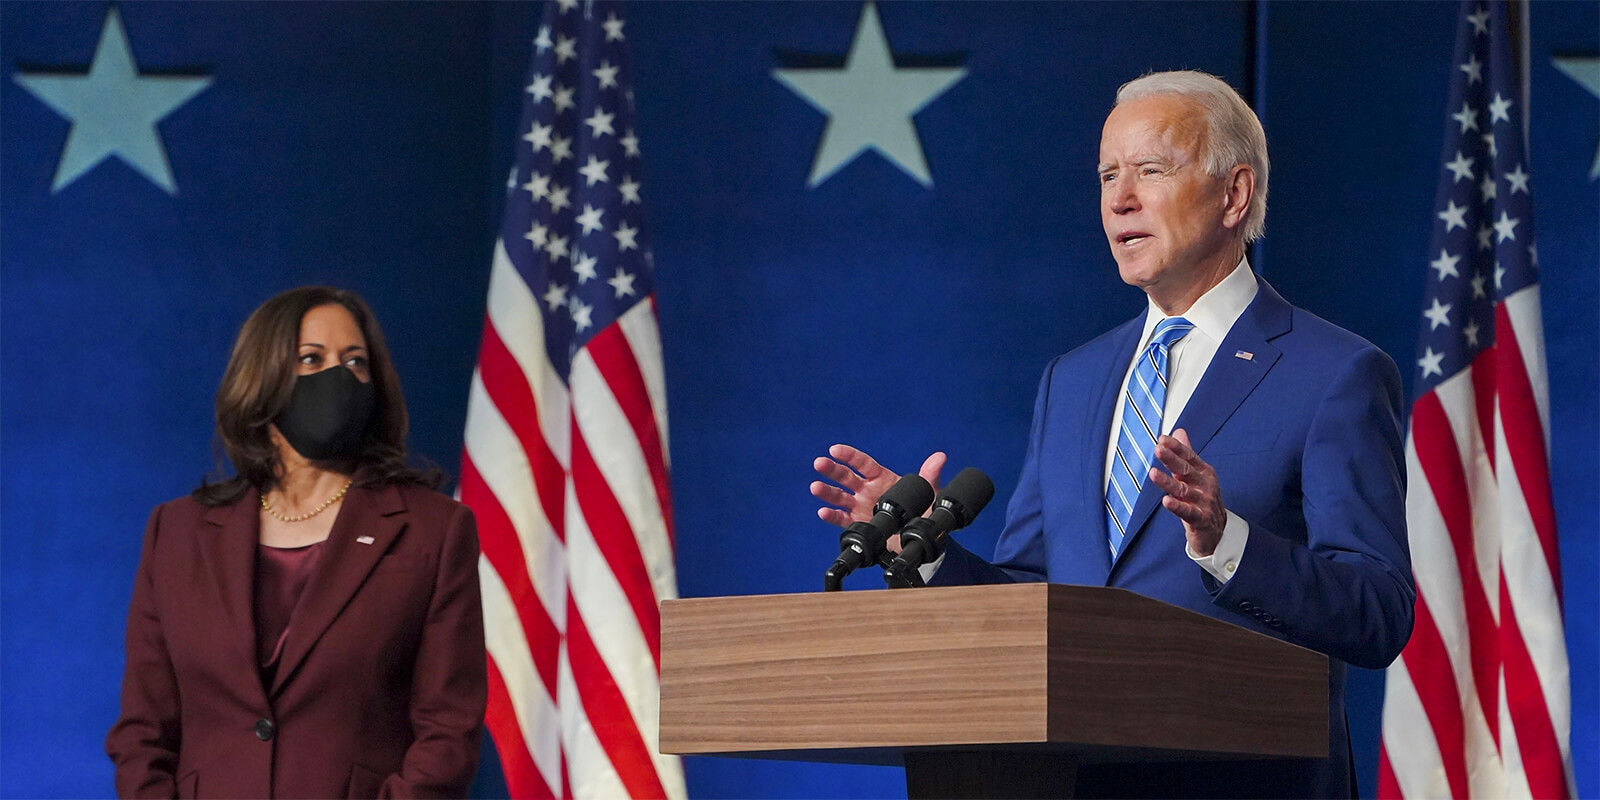 Biden, Harris win after voters’ voices were heard in democratic process